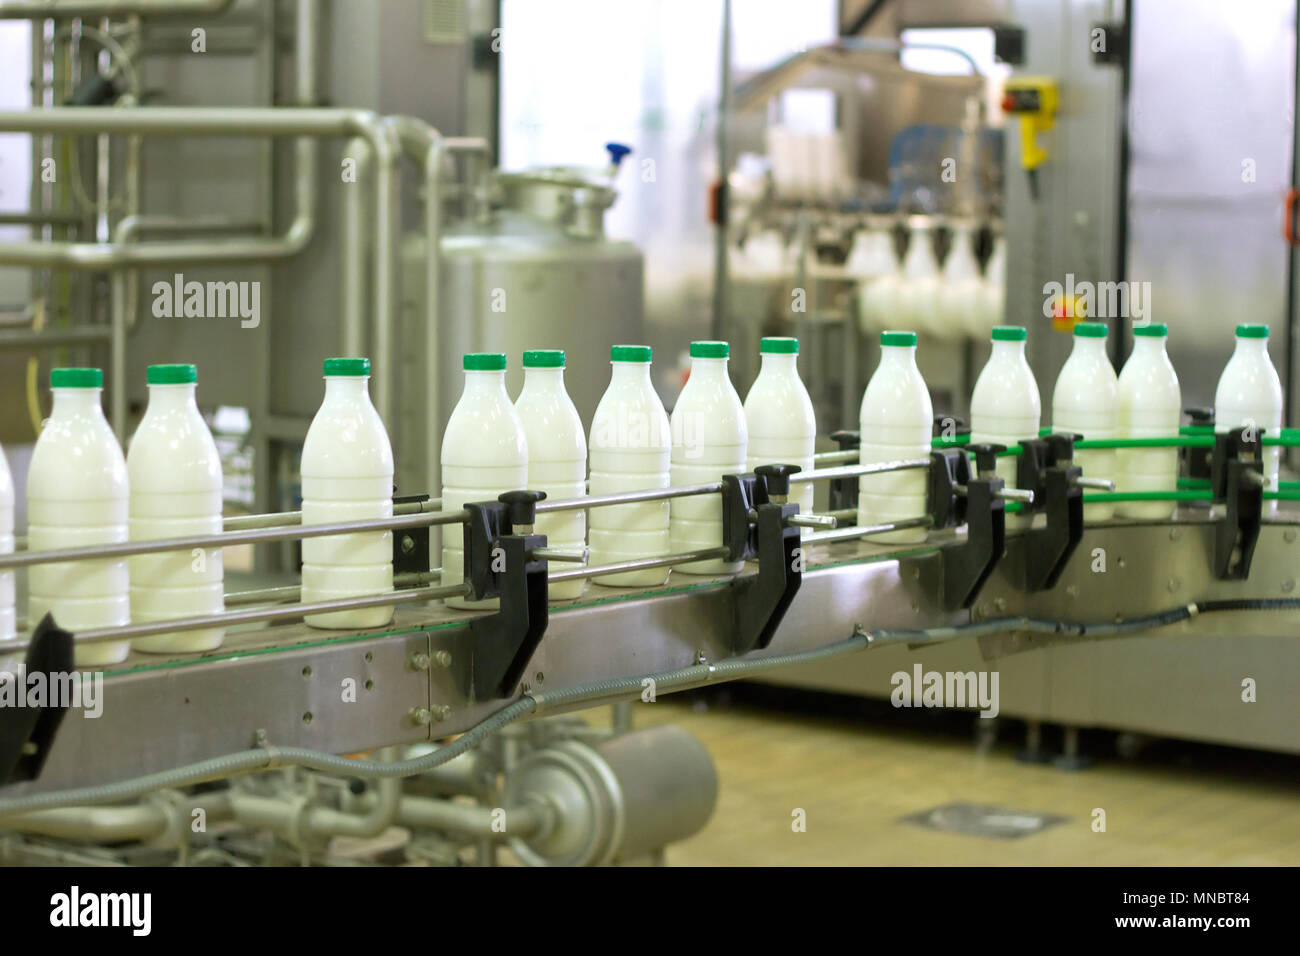 Dairy Plant. Conveyor with milk bottles Stock Photo - Alamy